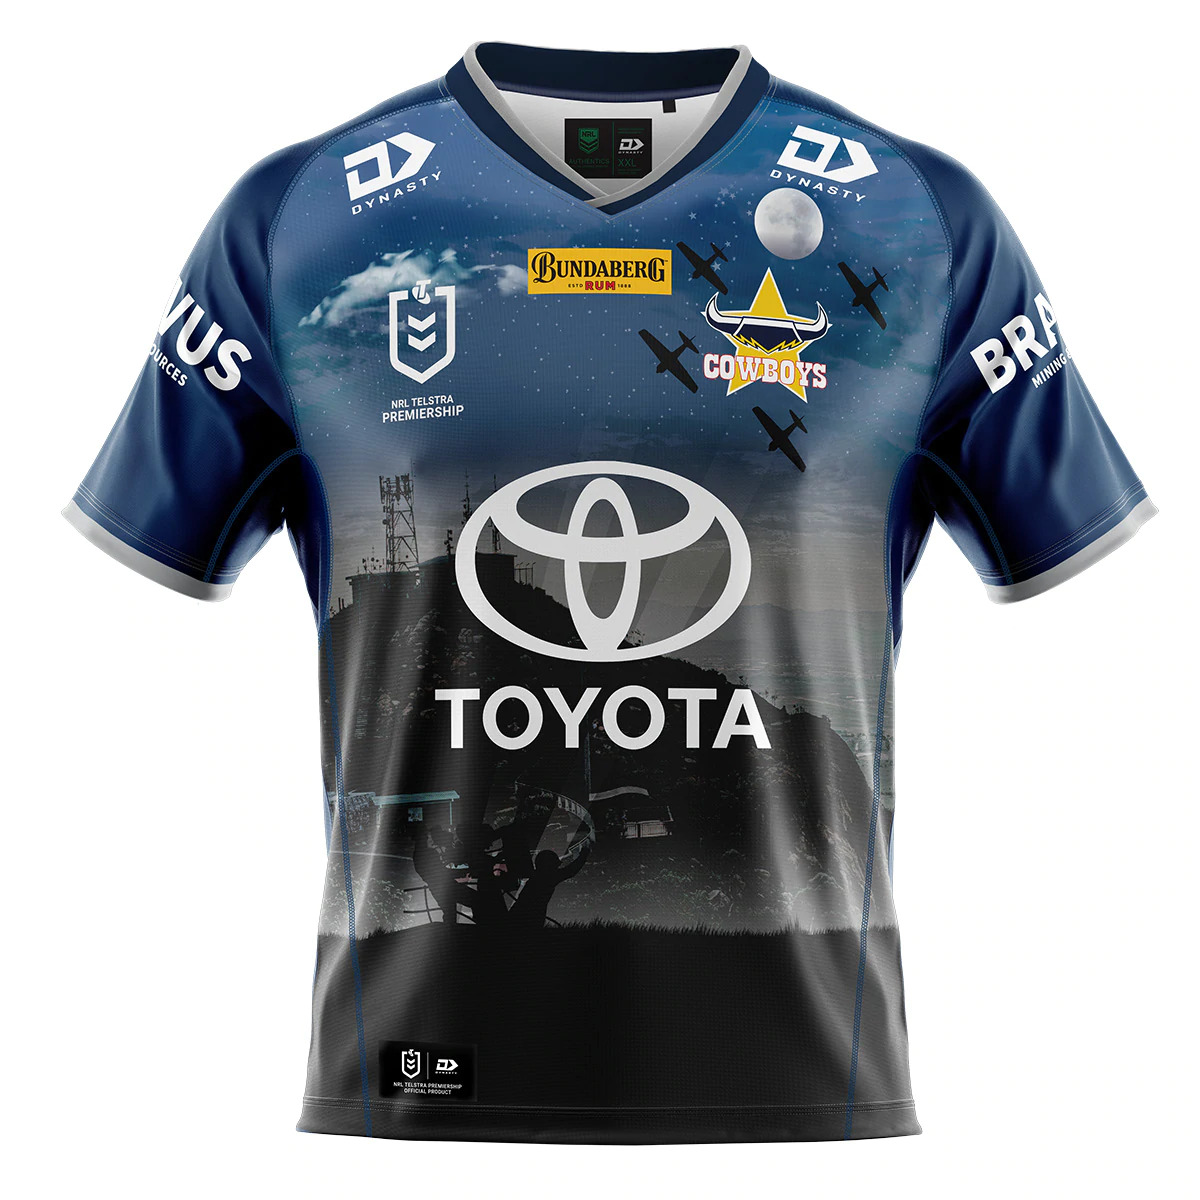 Melbourne Demons 2021 AFL Navy Premiers Polo Shirt Sizes S-5XL BNWT 